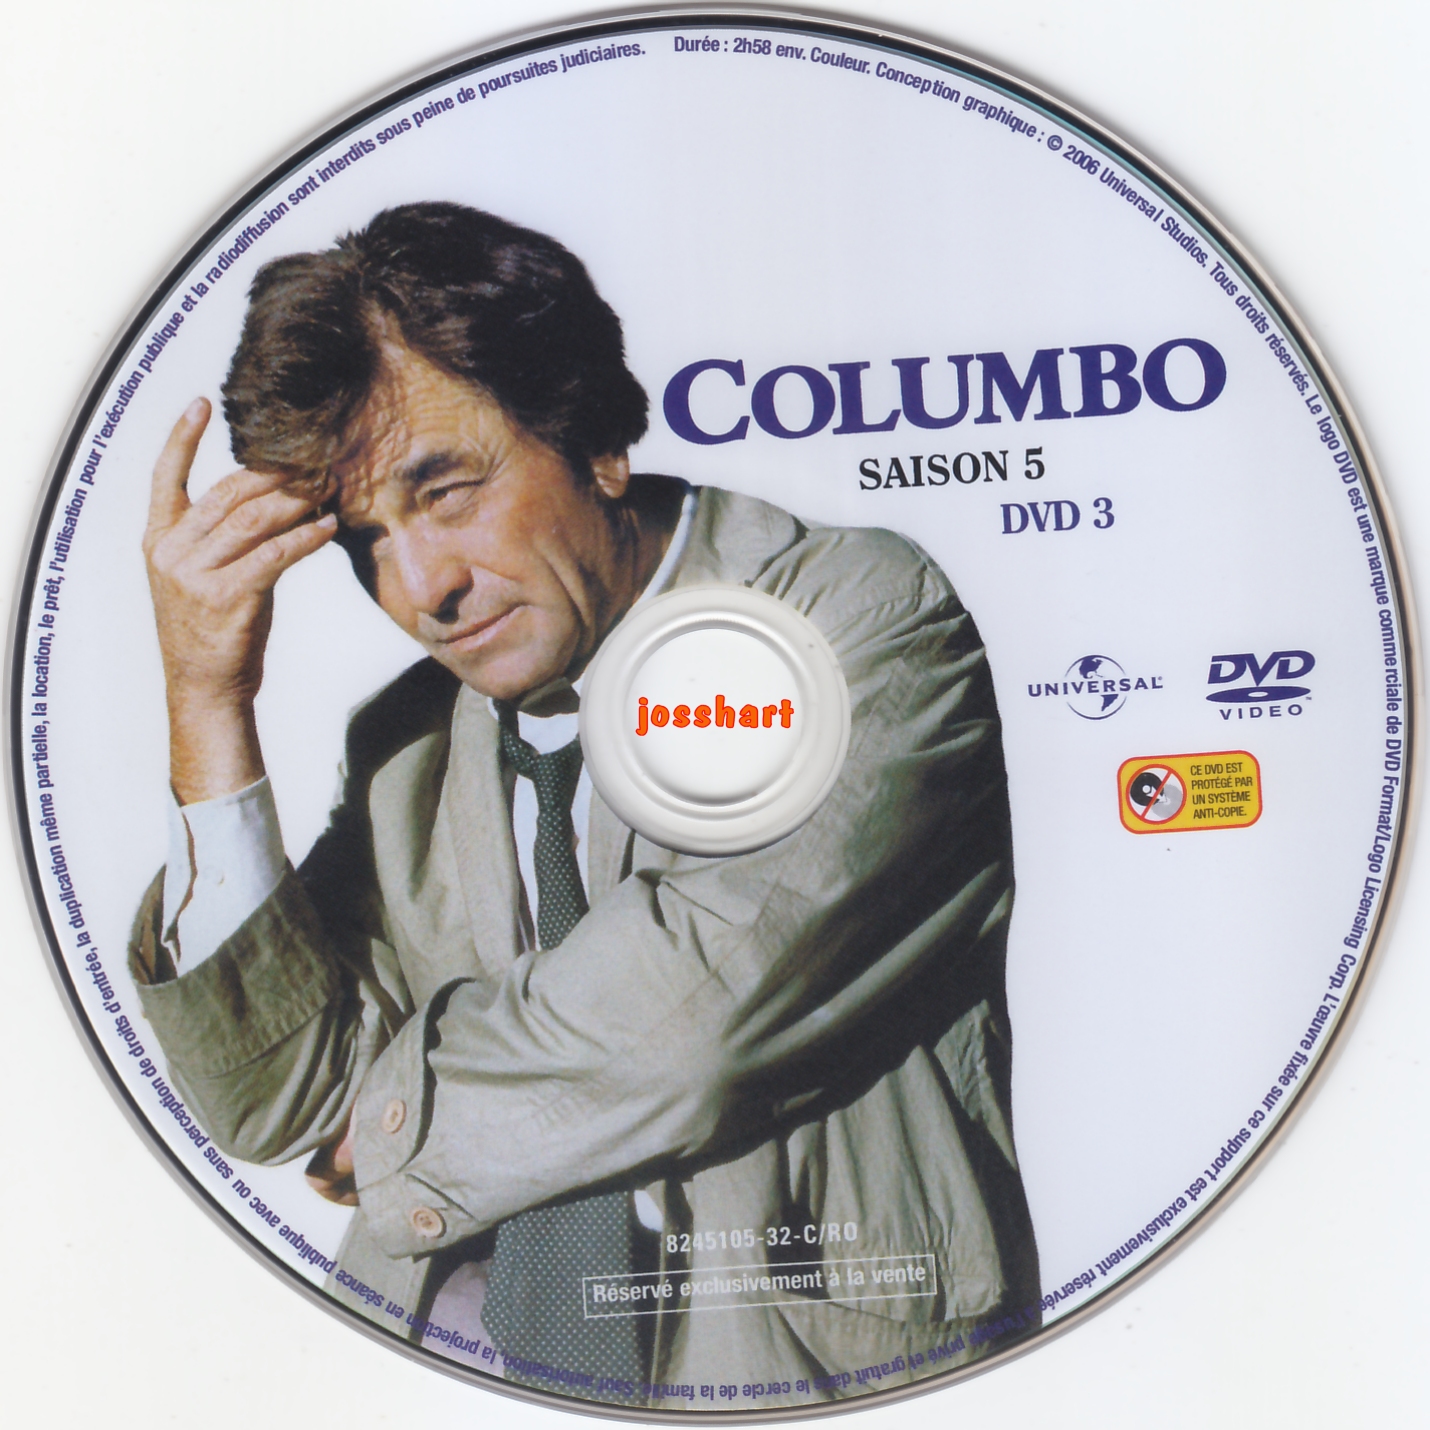 Columbo S5 DISC3